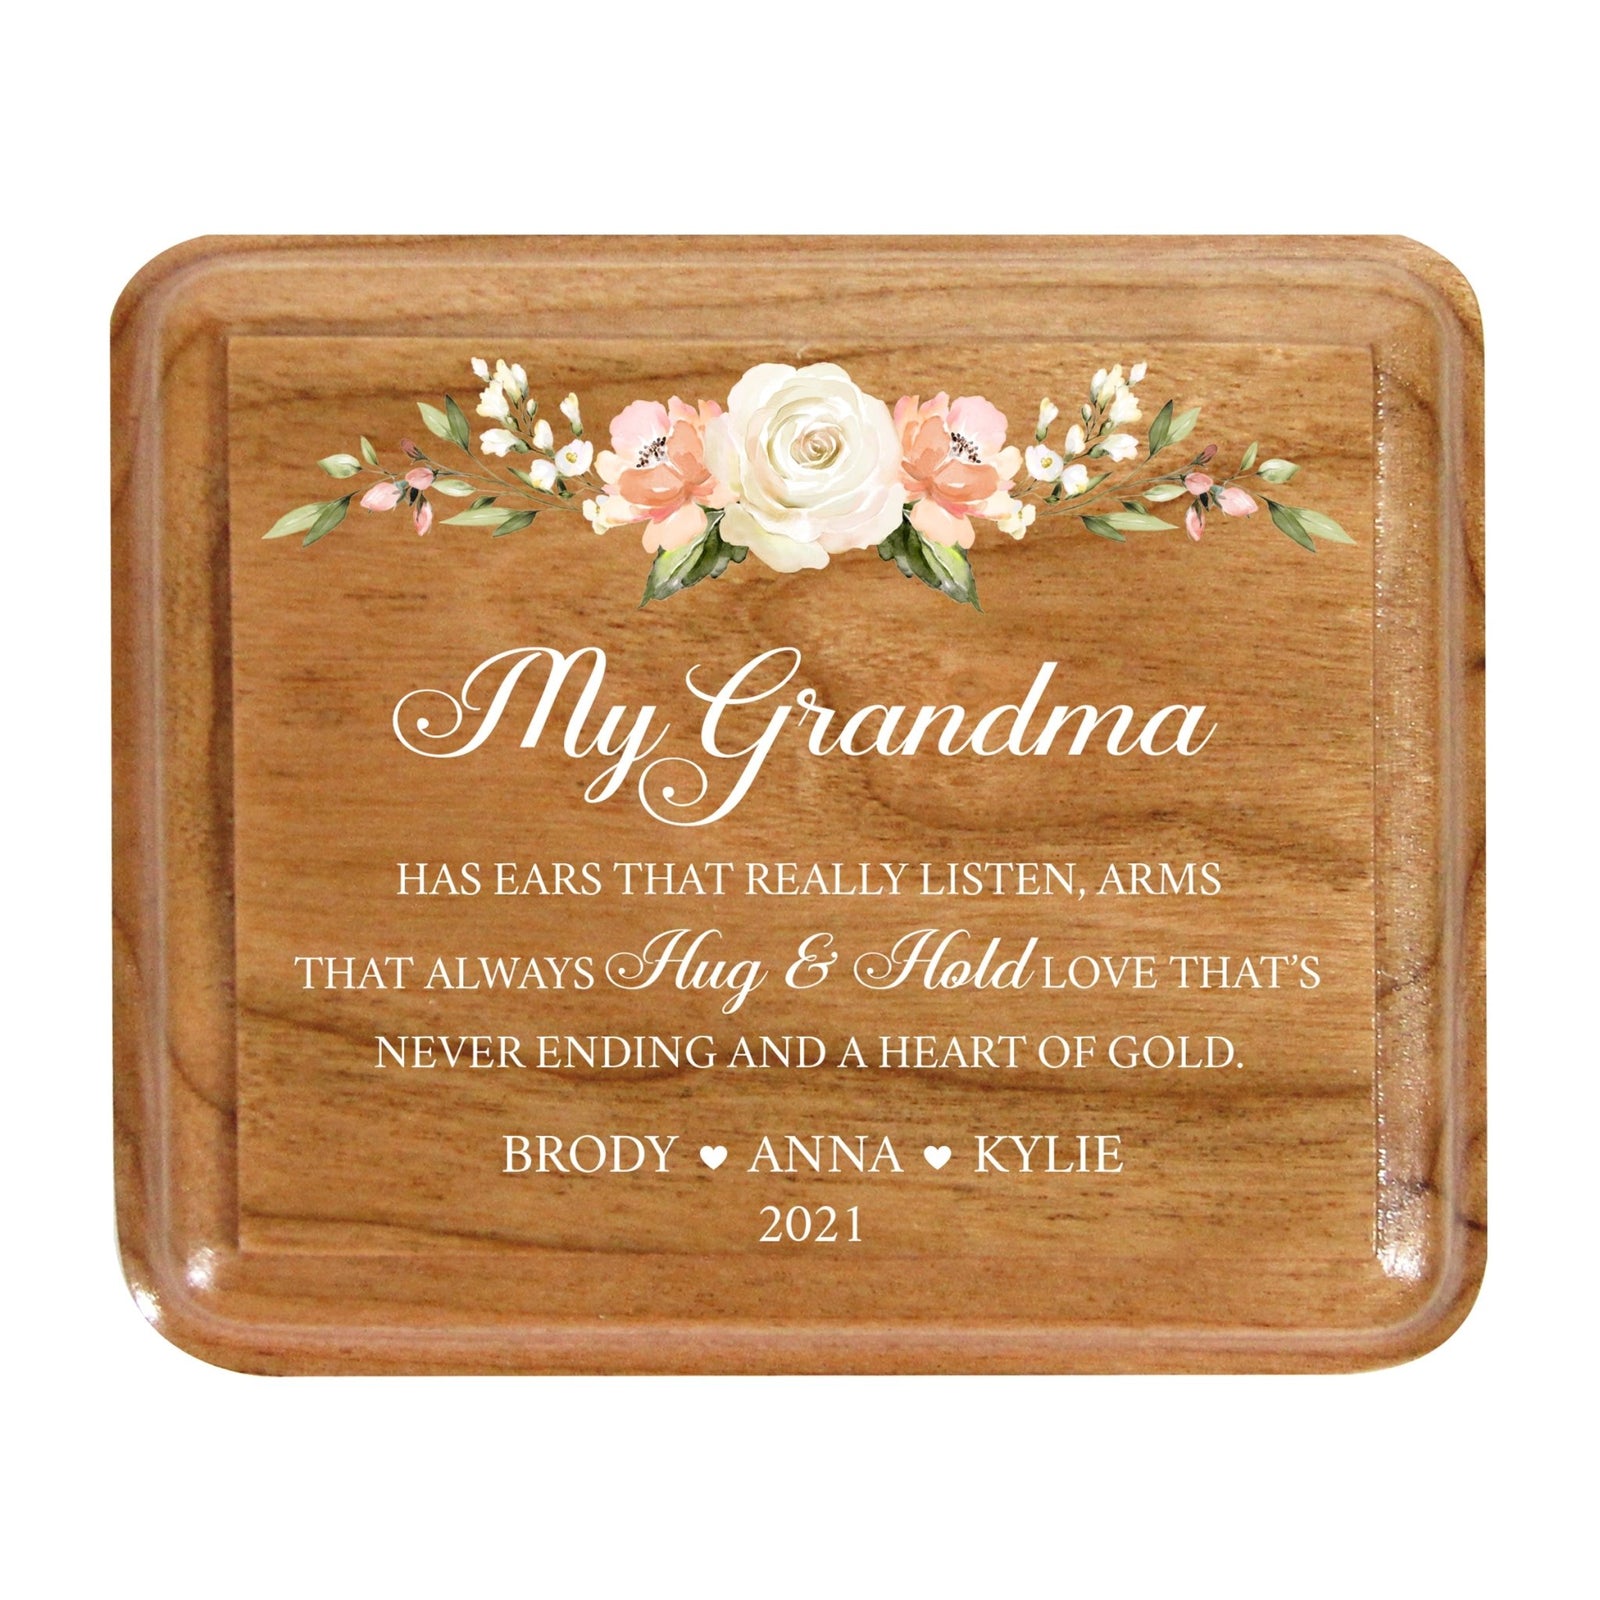 Custom Modern Keepsake Box Inspirational Quotes for Grandmother 3.5x3 My Grandma Has - LifeSong Milestones